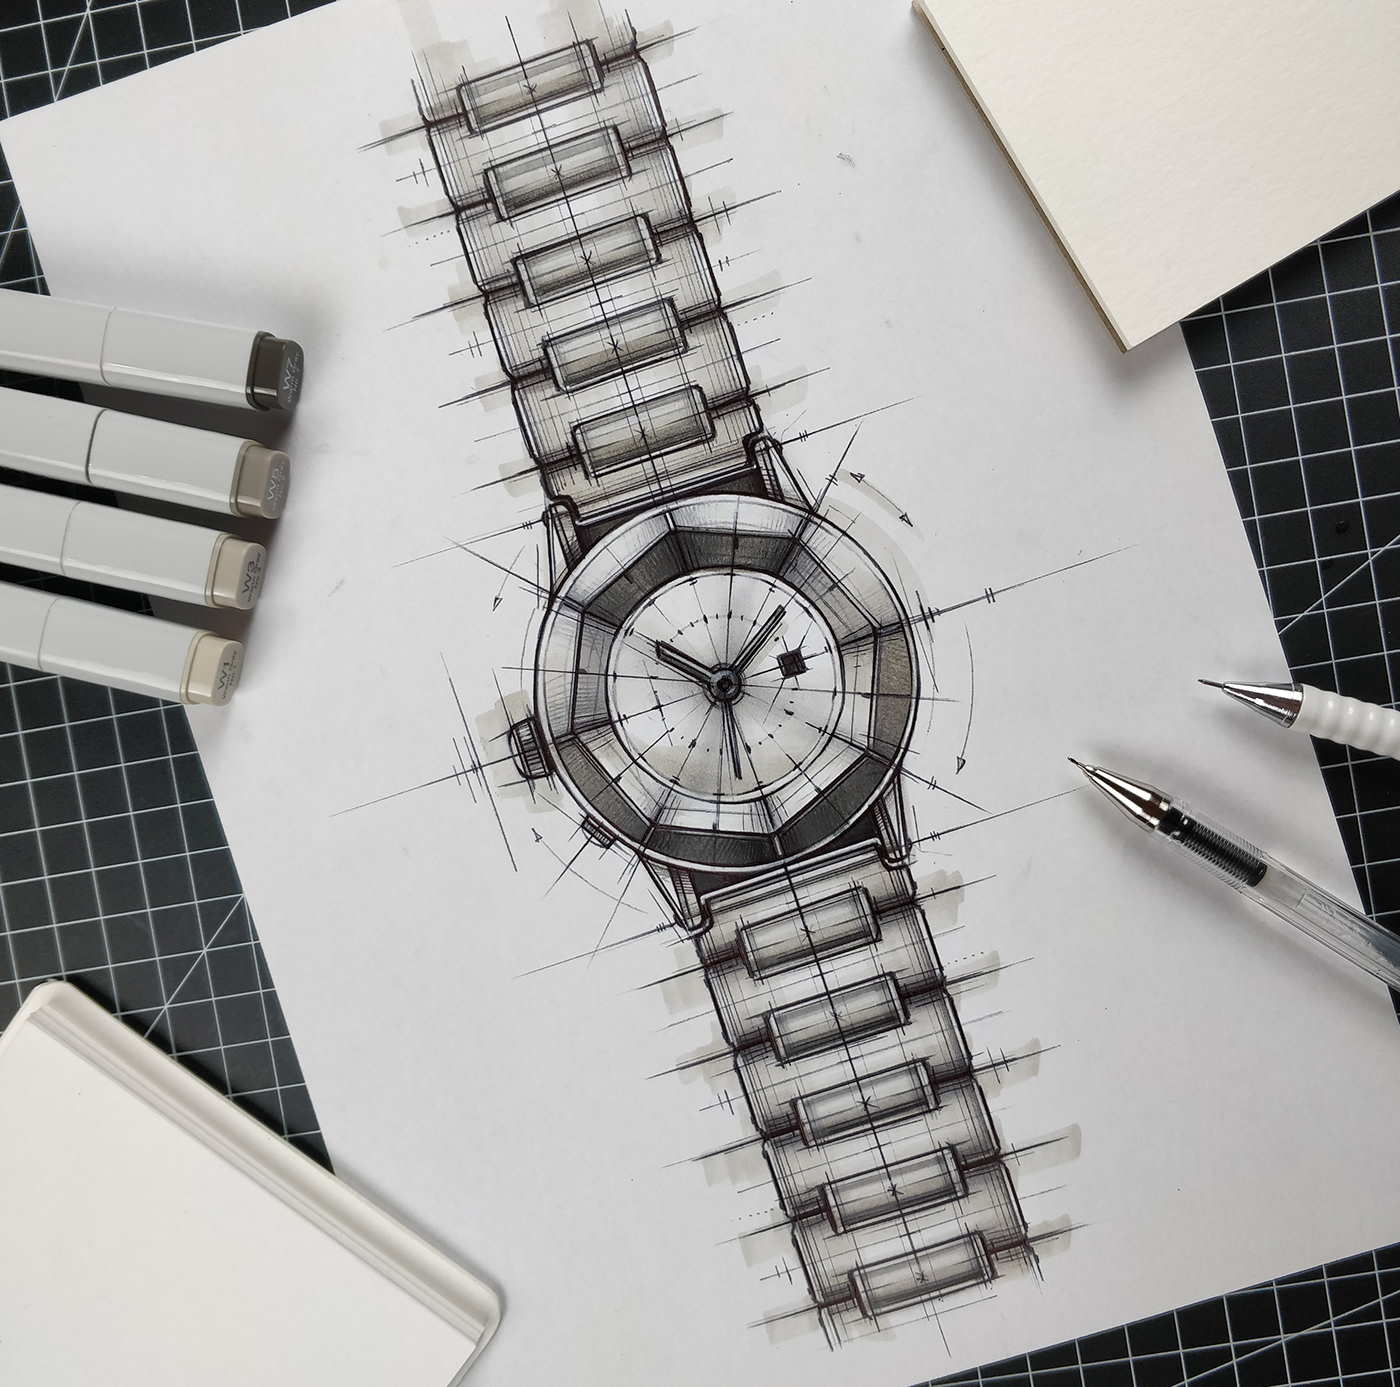 Drawing  industrialdesign learnsketching Perspective product productdesign Produktdesign sketch sketchbook sketching